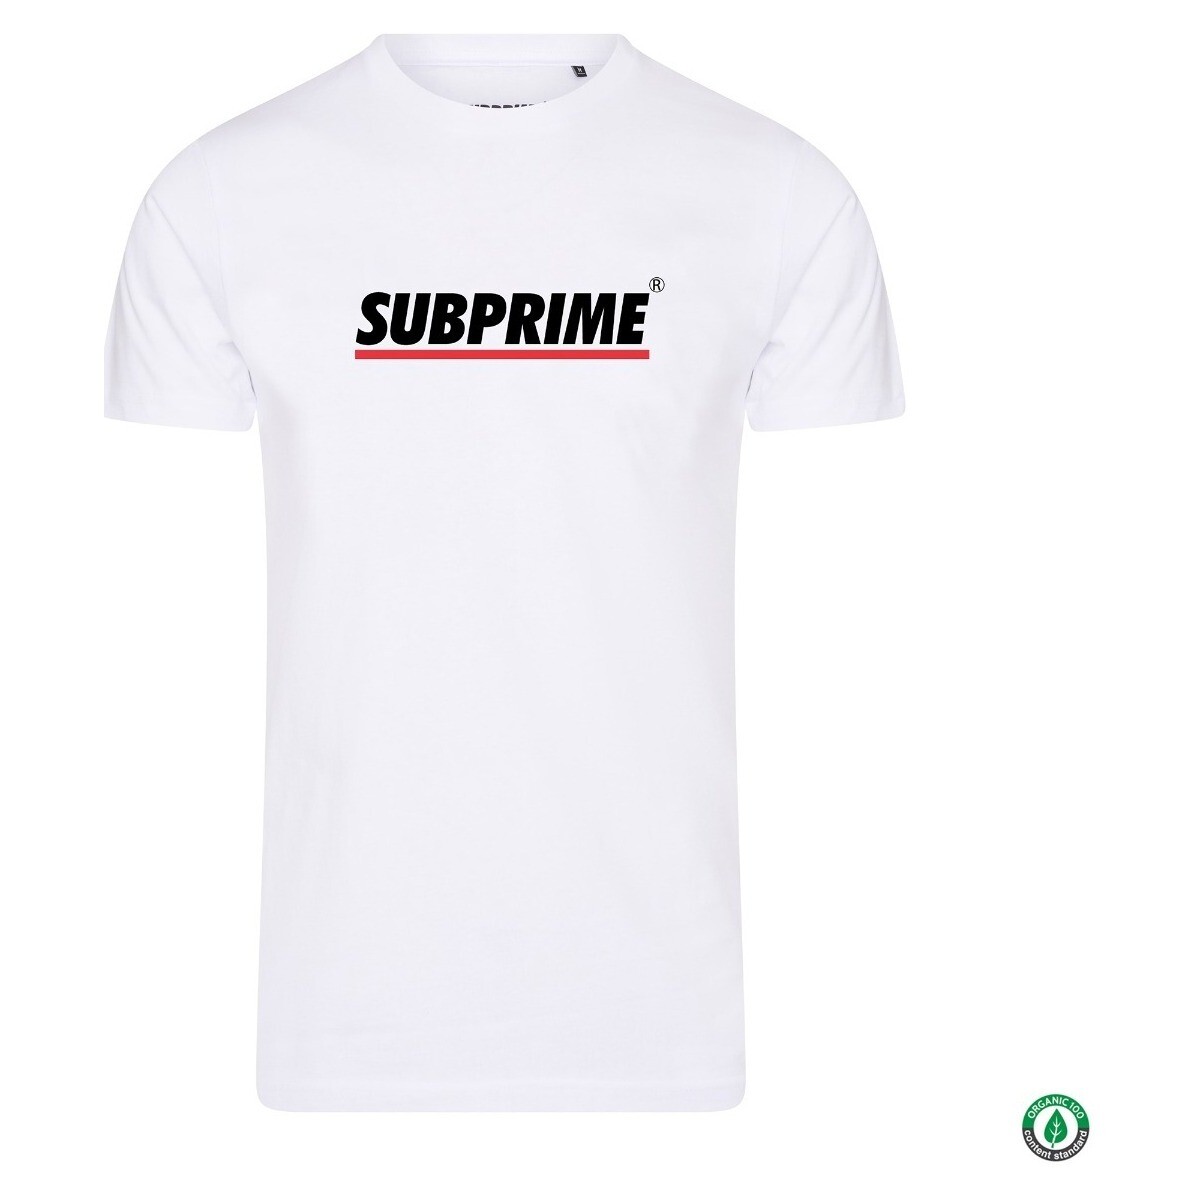 Vêtements T-shirts manches courtes Subprime Shirt Stripe White Blanc